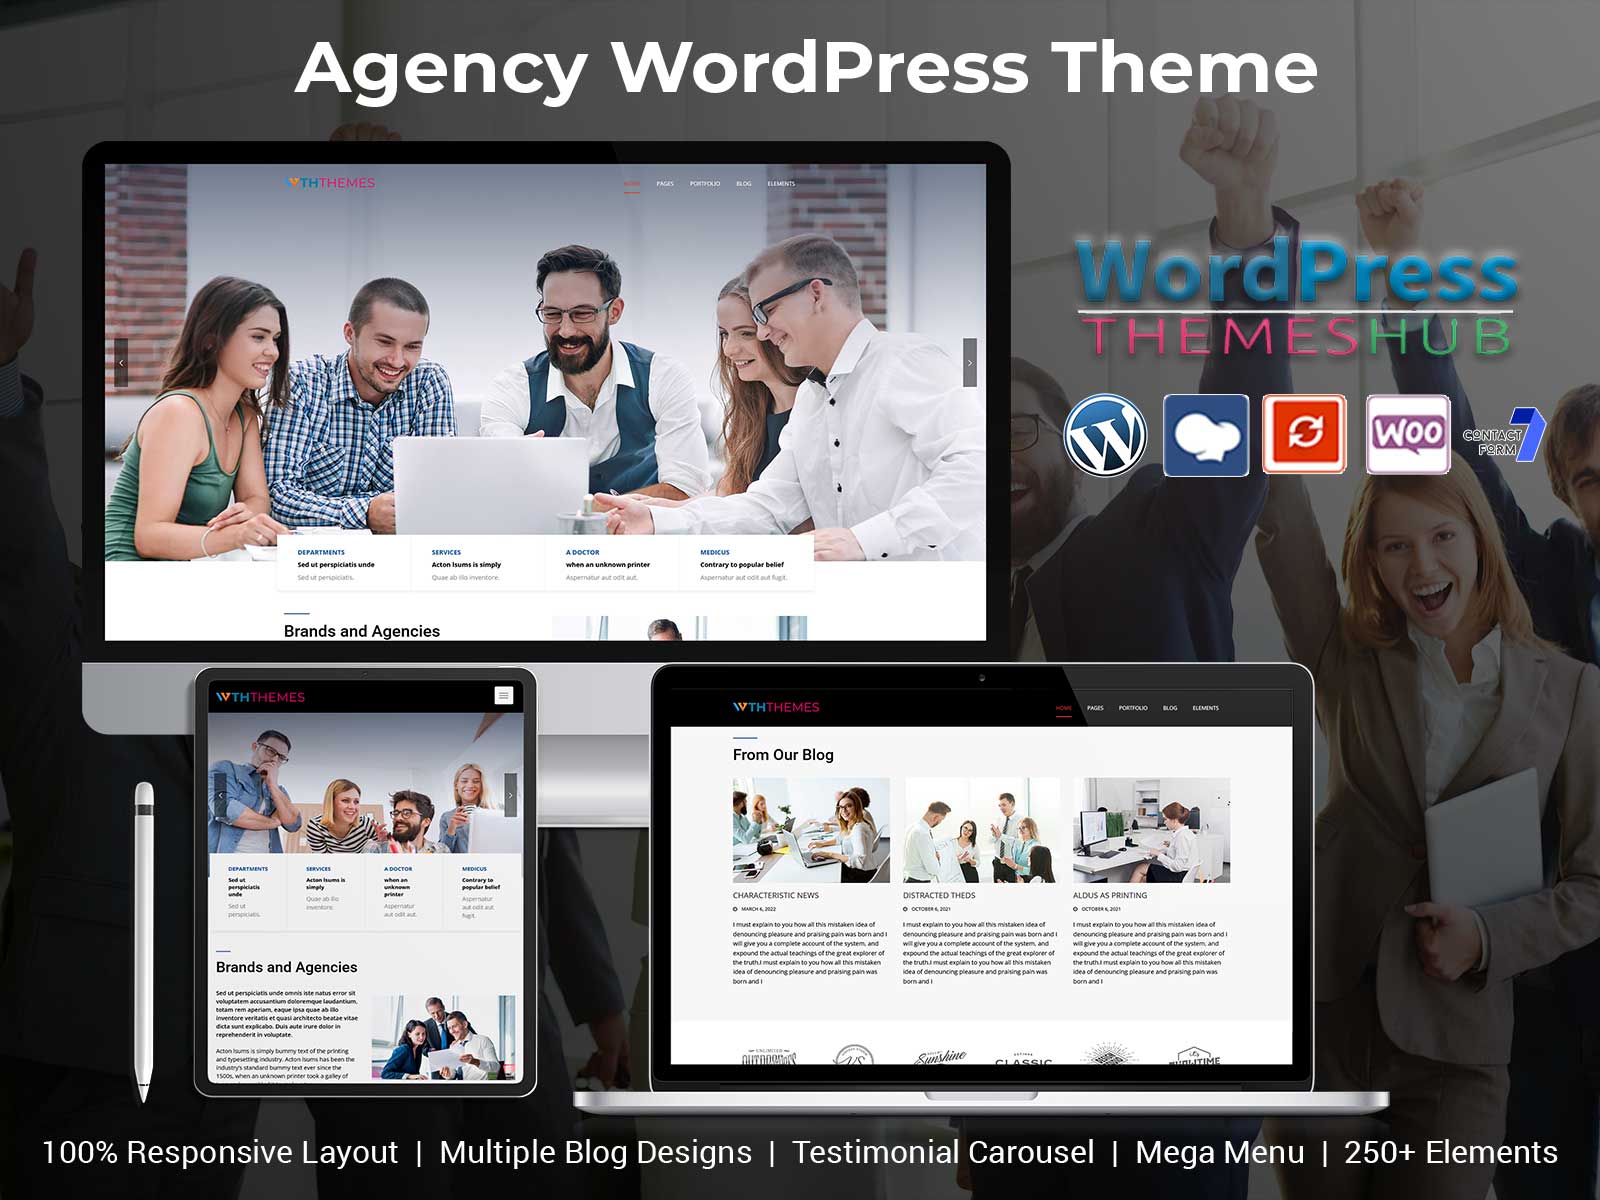 Agency WordPress Theme For Agency Website